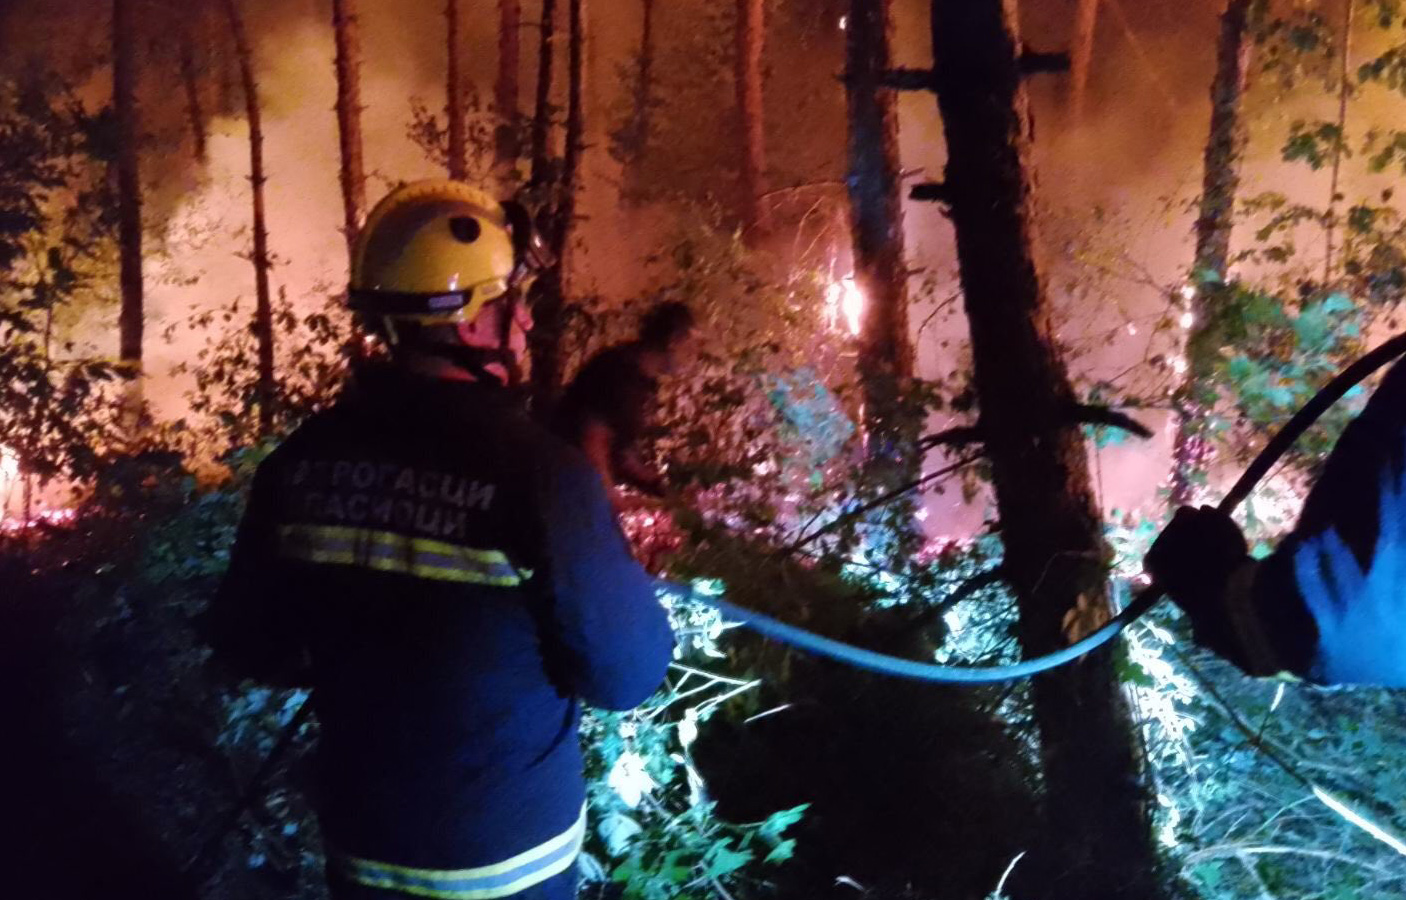 Požar koji je juče izbio u okolini Preševa, za manje od 24 časa stavlјen je pod kontrolu